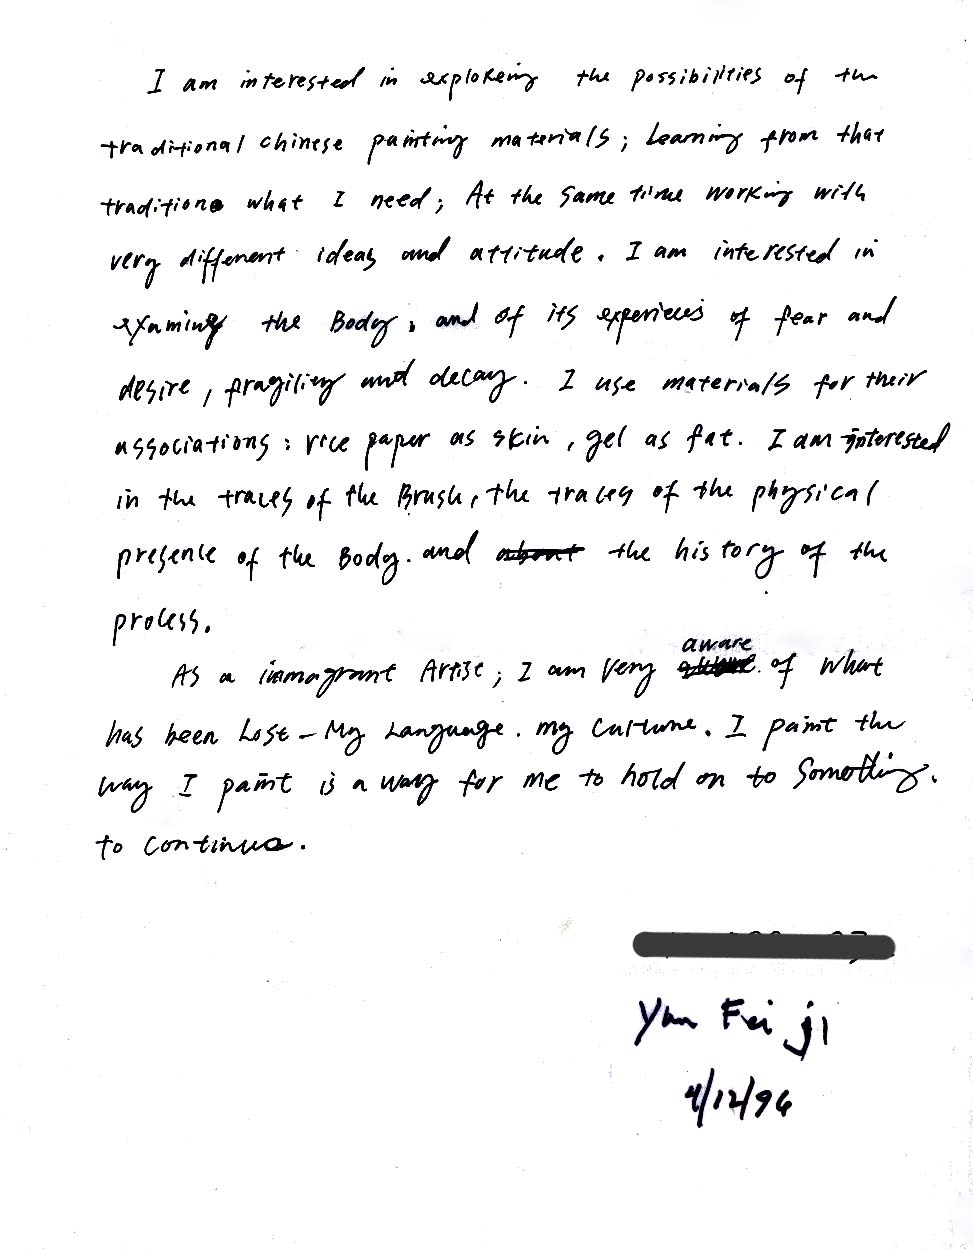 Yun-Fei Ji's Artist Statement, 1994